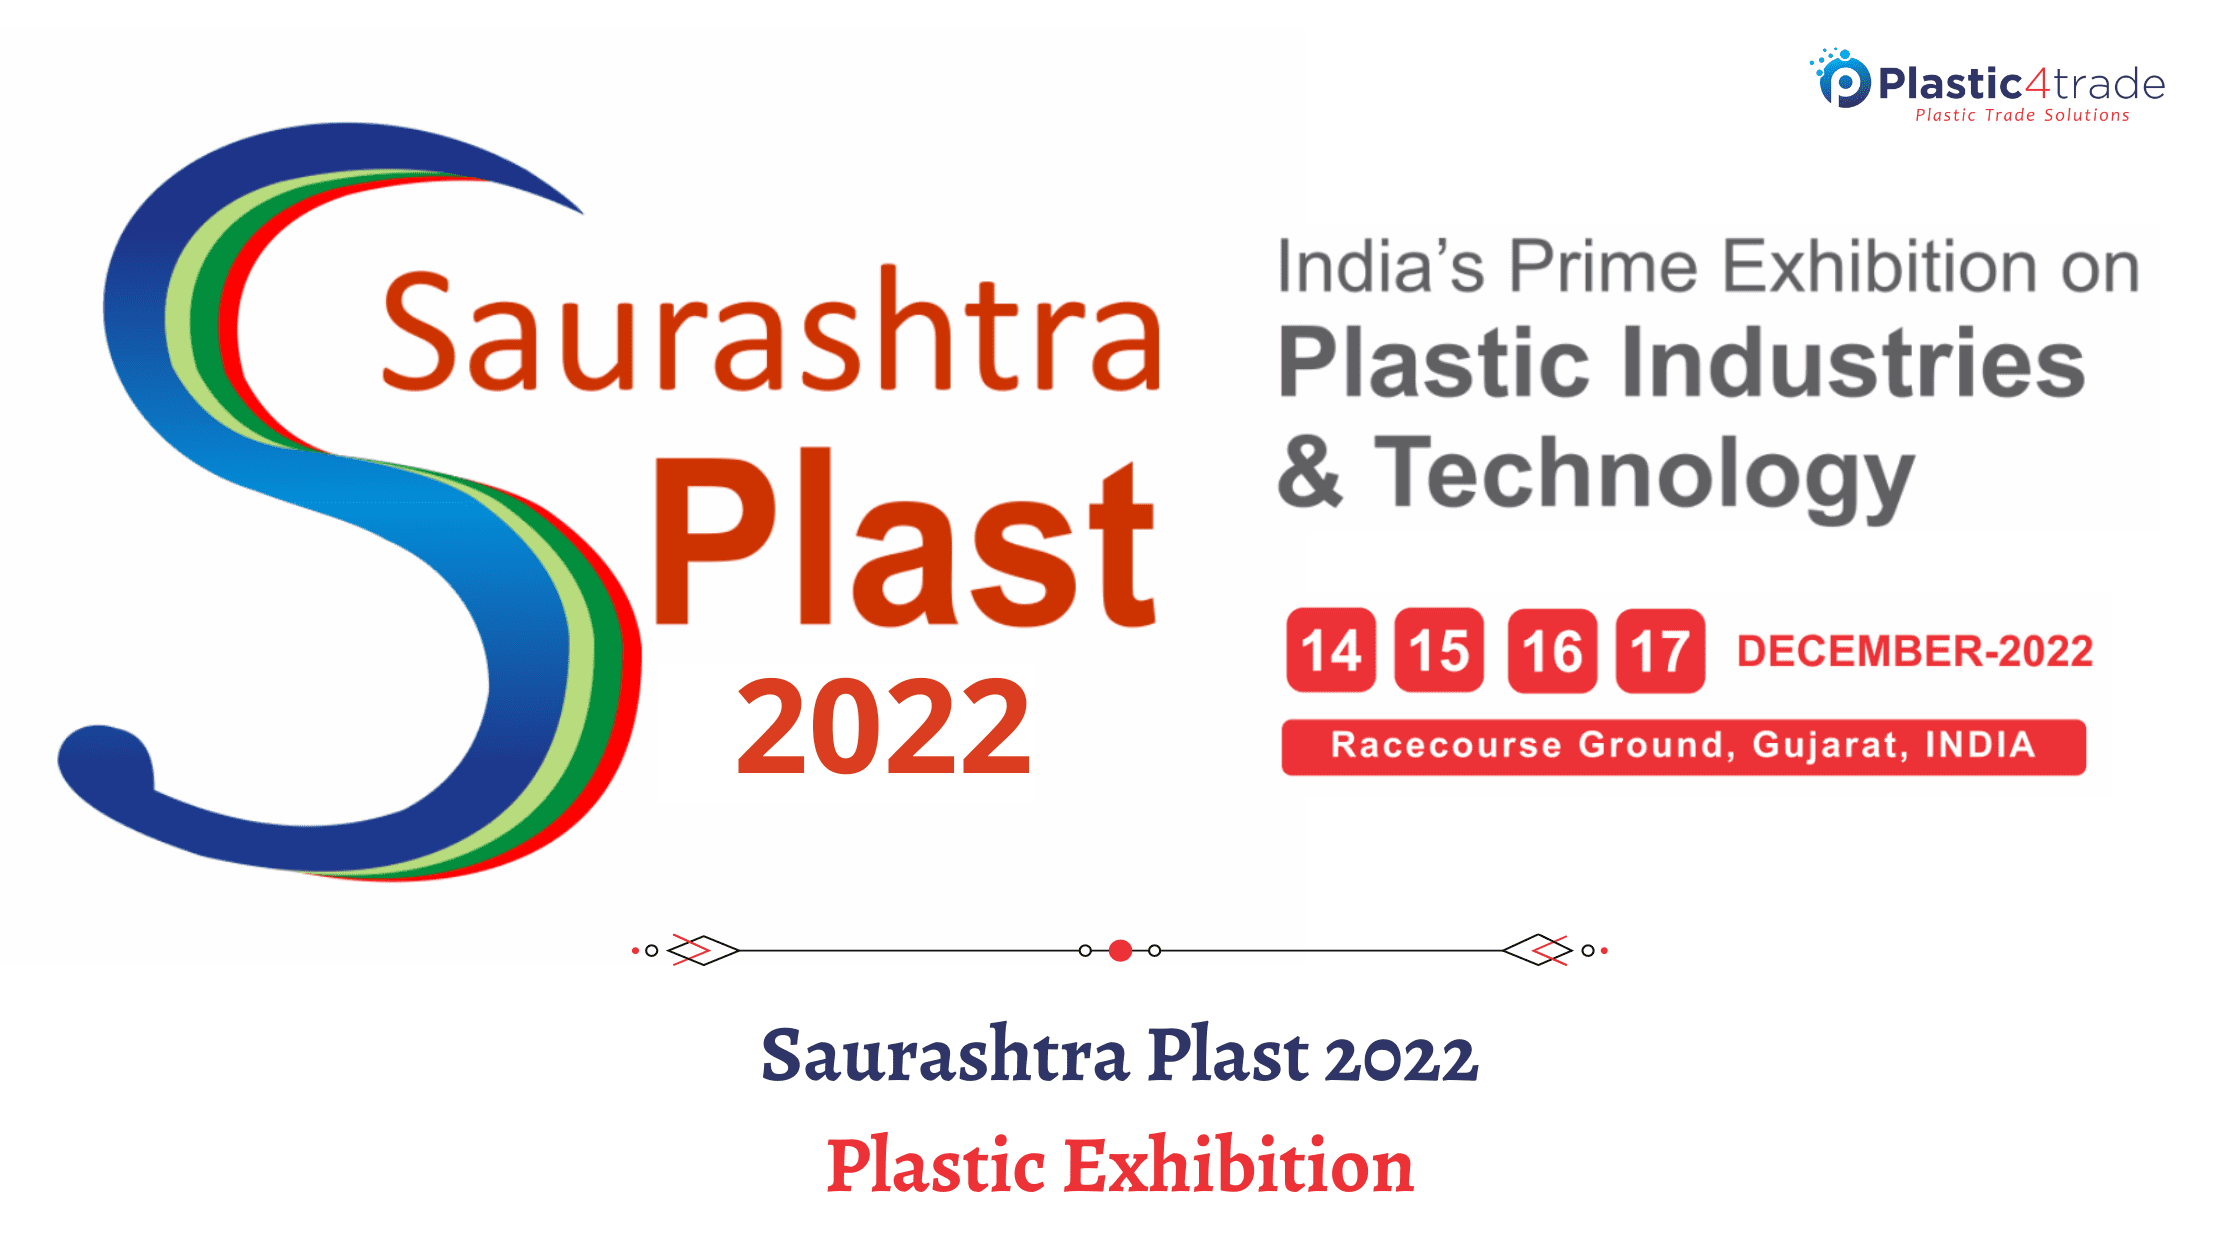 Saurashtra Plast Exhibition 2022 Plastic Exhibition in Rajkot India Plastic4trade